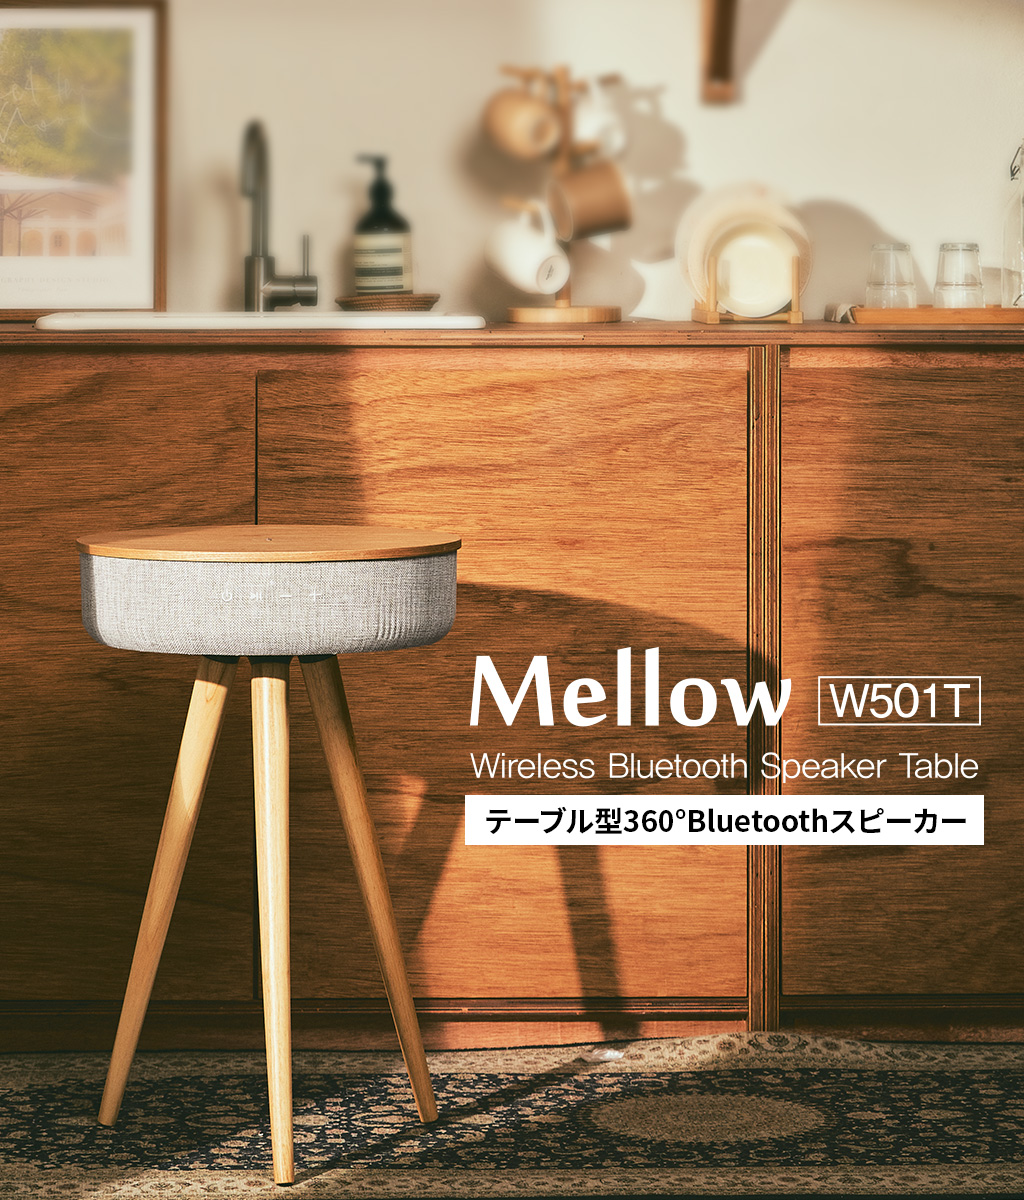 Welle 360°Bluetoothテーブル型スピーカー Mellow W501T ラジオ、CD